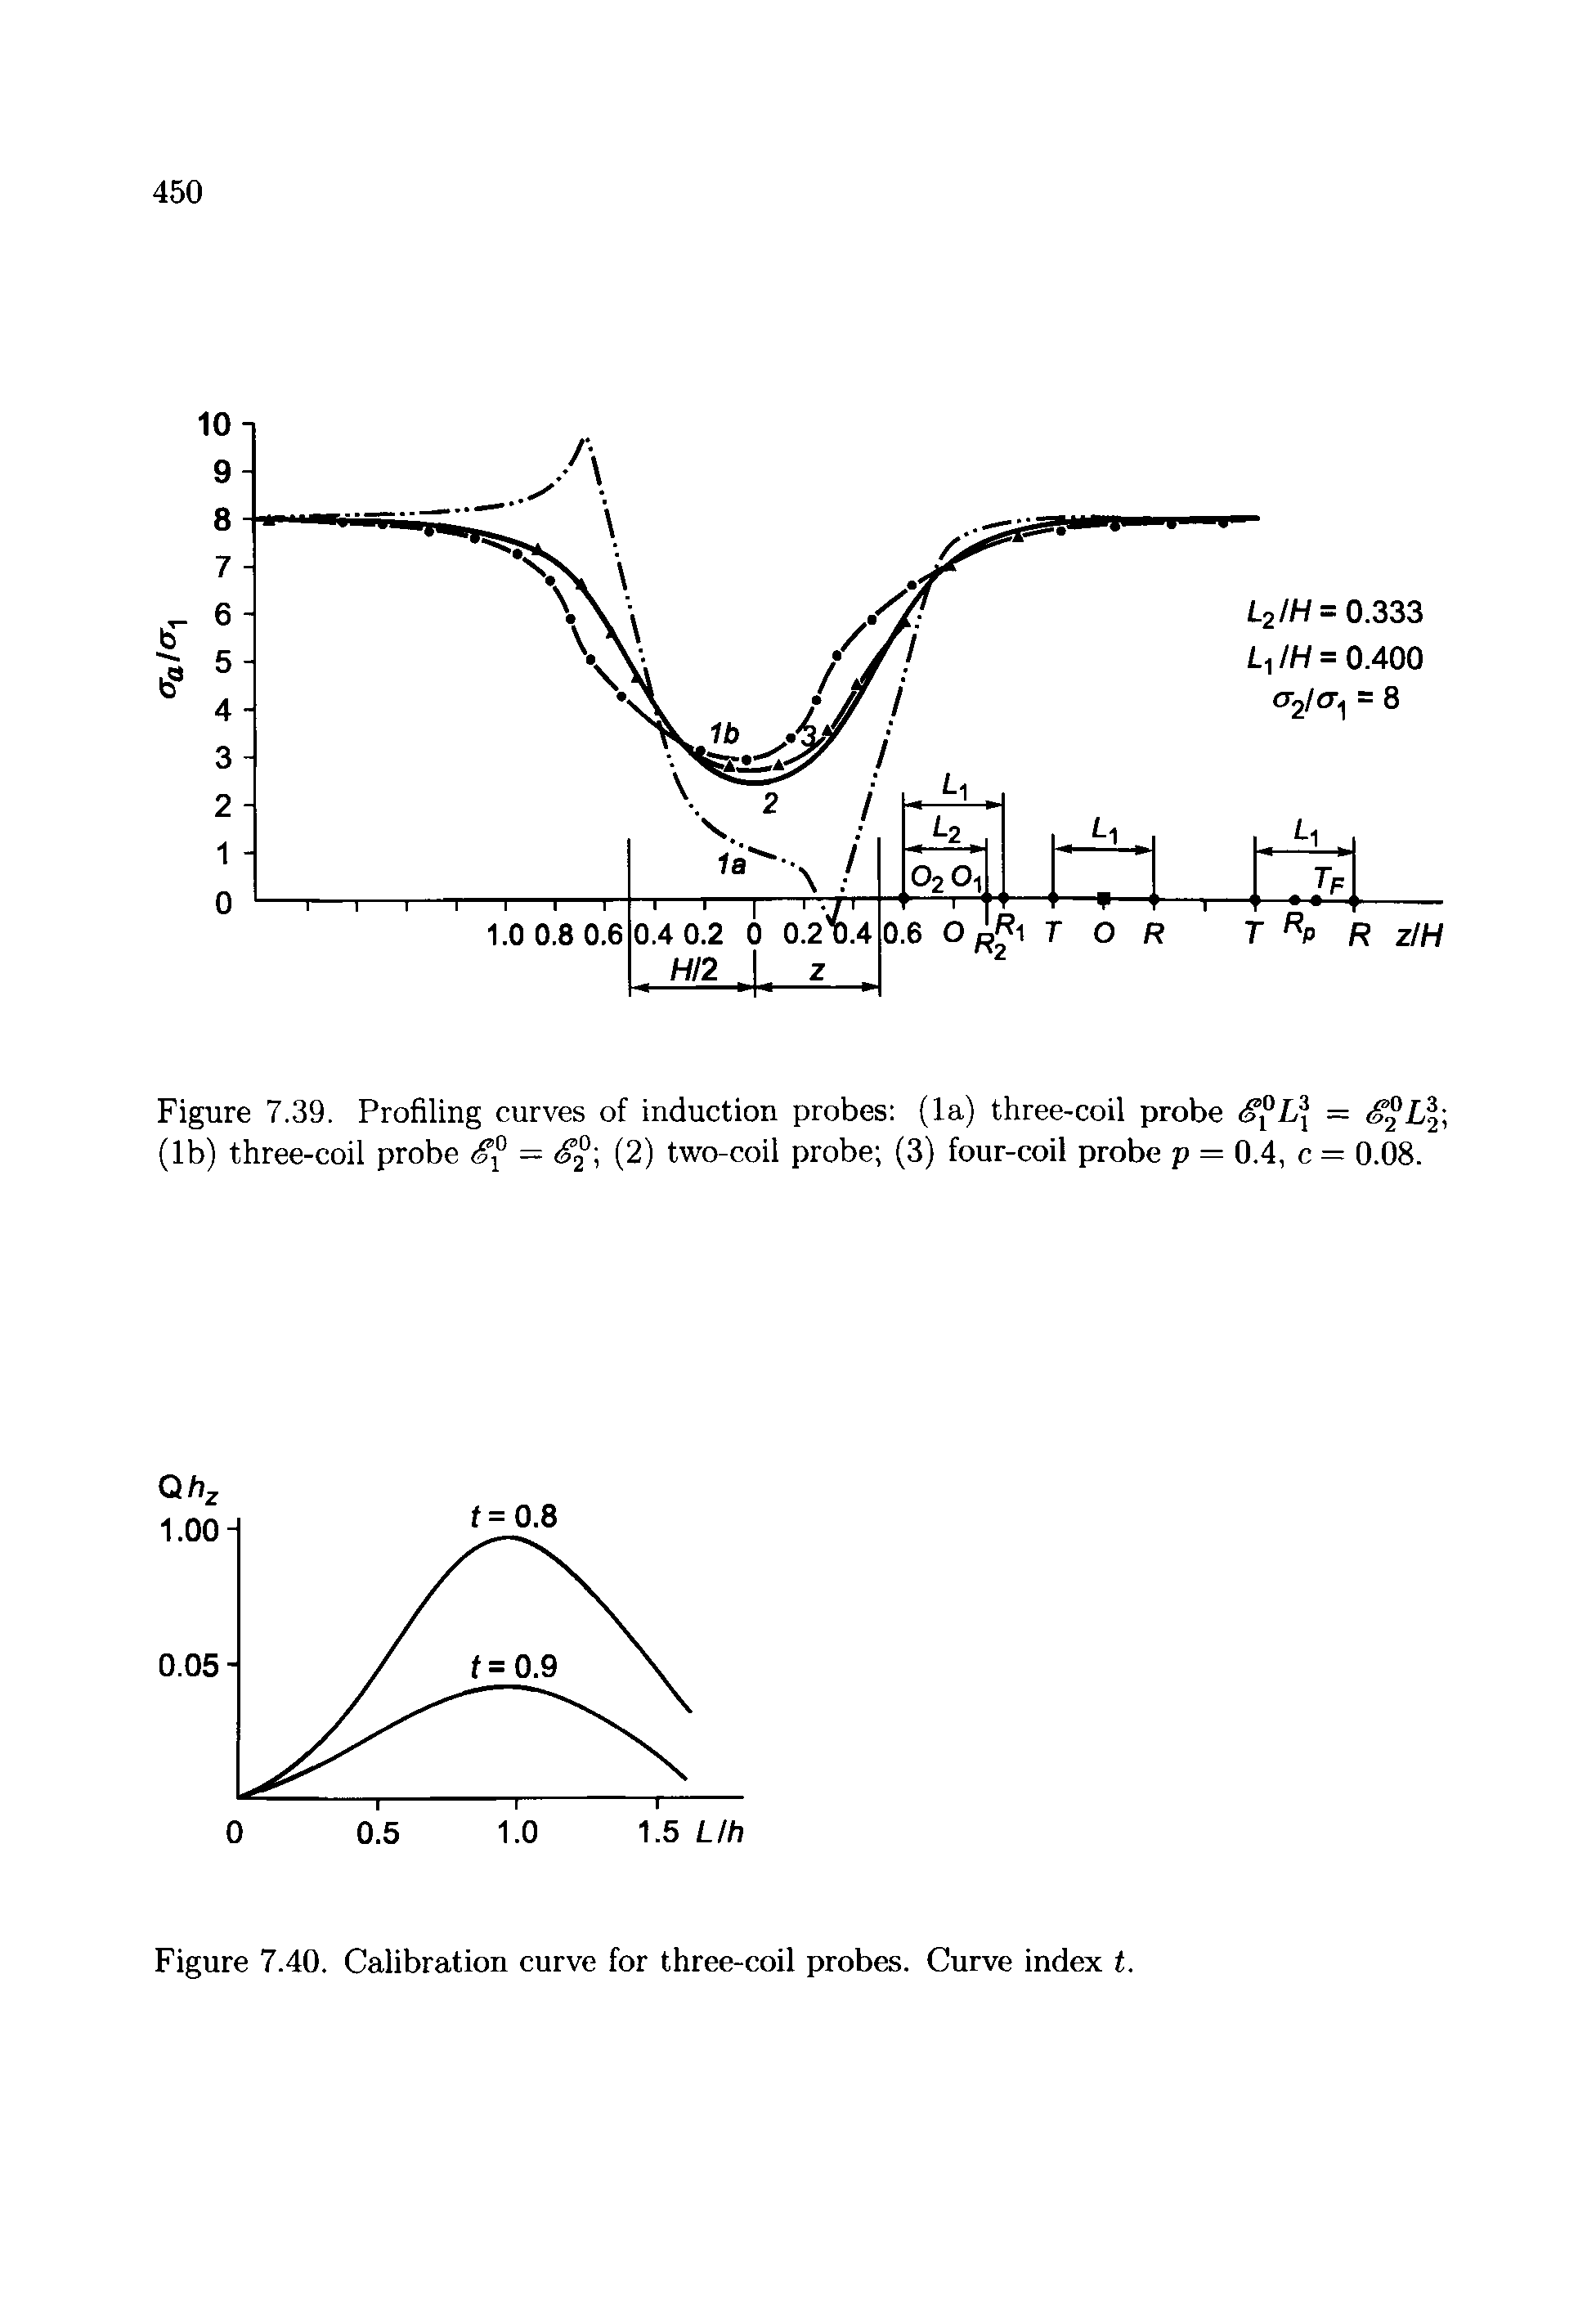 Figure 7.39. Profiling curves of induction probes (la) three-coil probe = S °Ll (lb) three-coil probe = S, (2) two-coil probe (3) four-coil probe p = 0.4, c = 0.08.